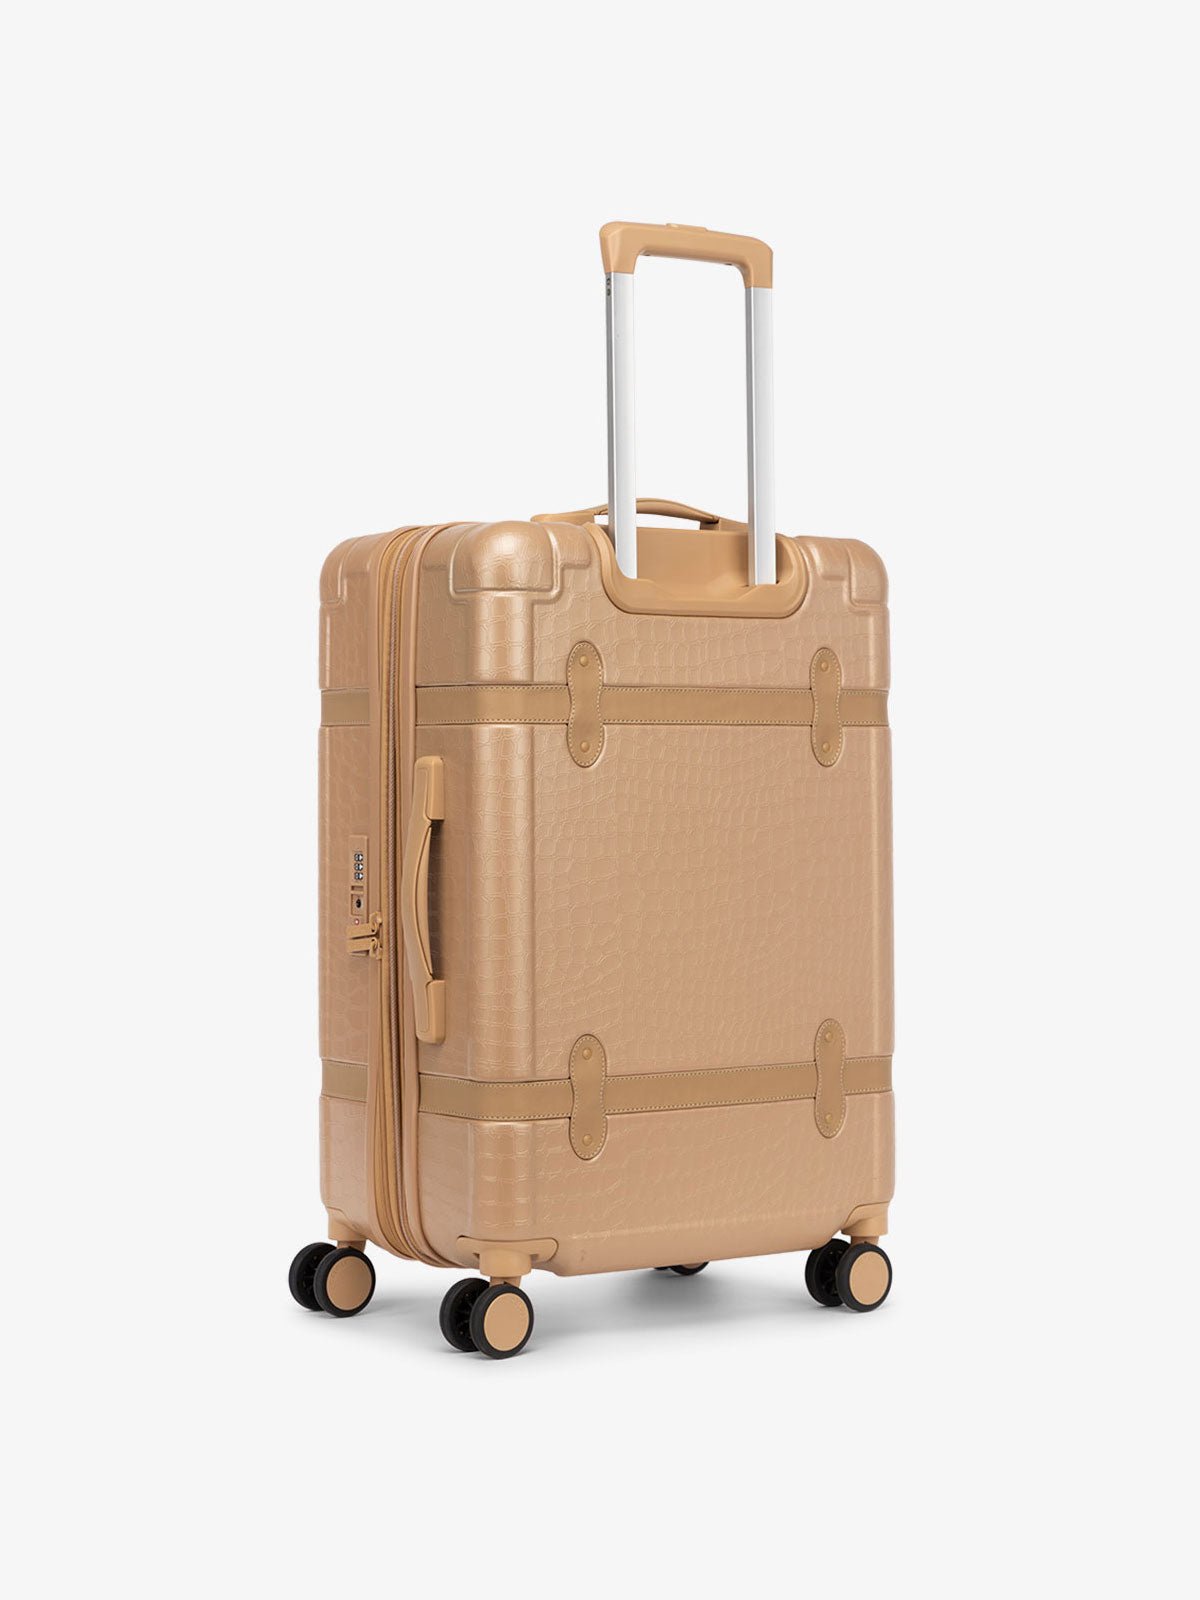 CALPAK TRNK beige almond luggage set in vintage trunk style